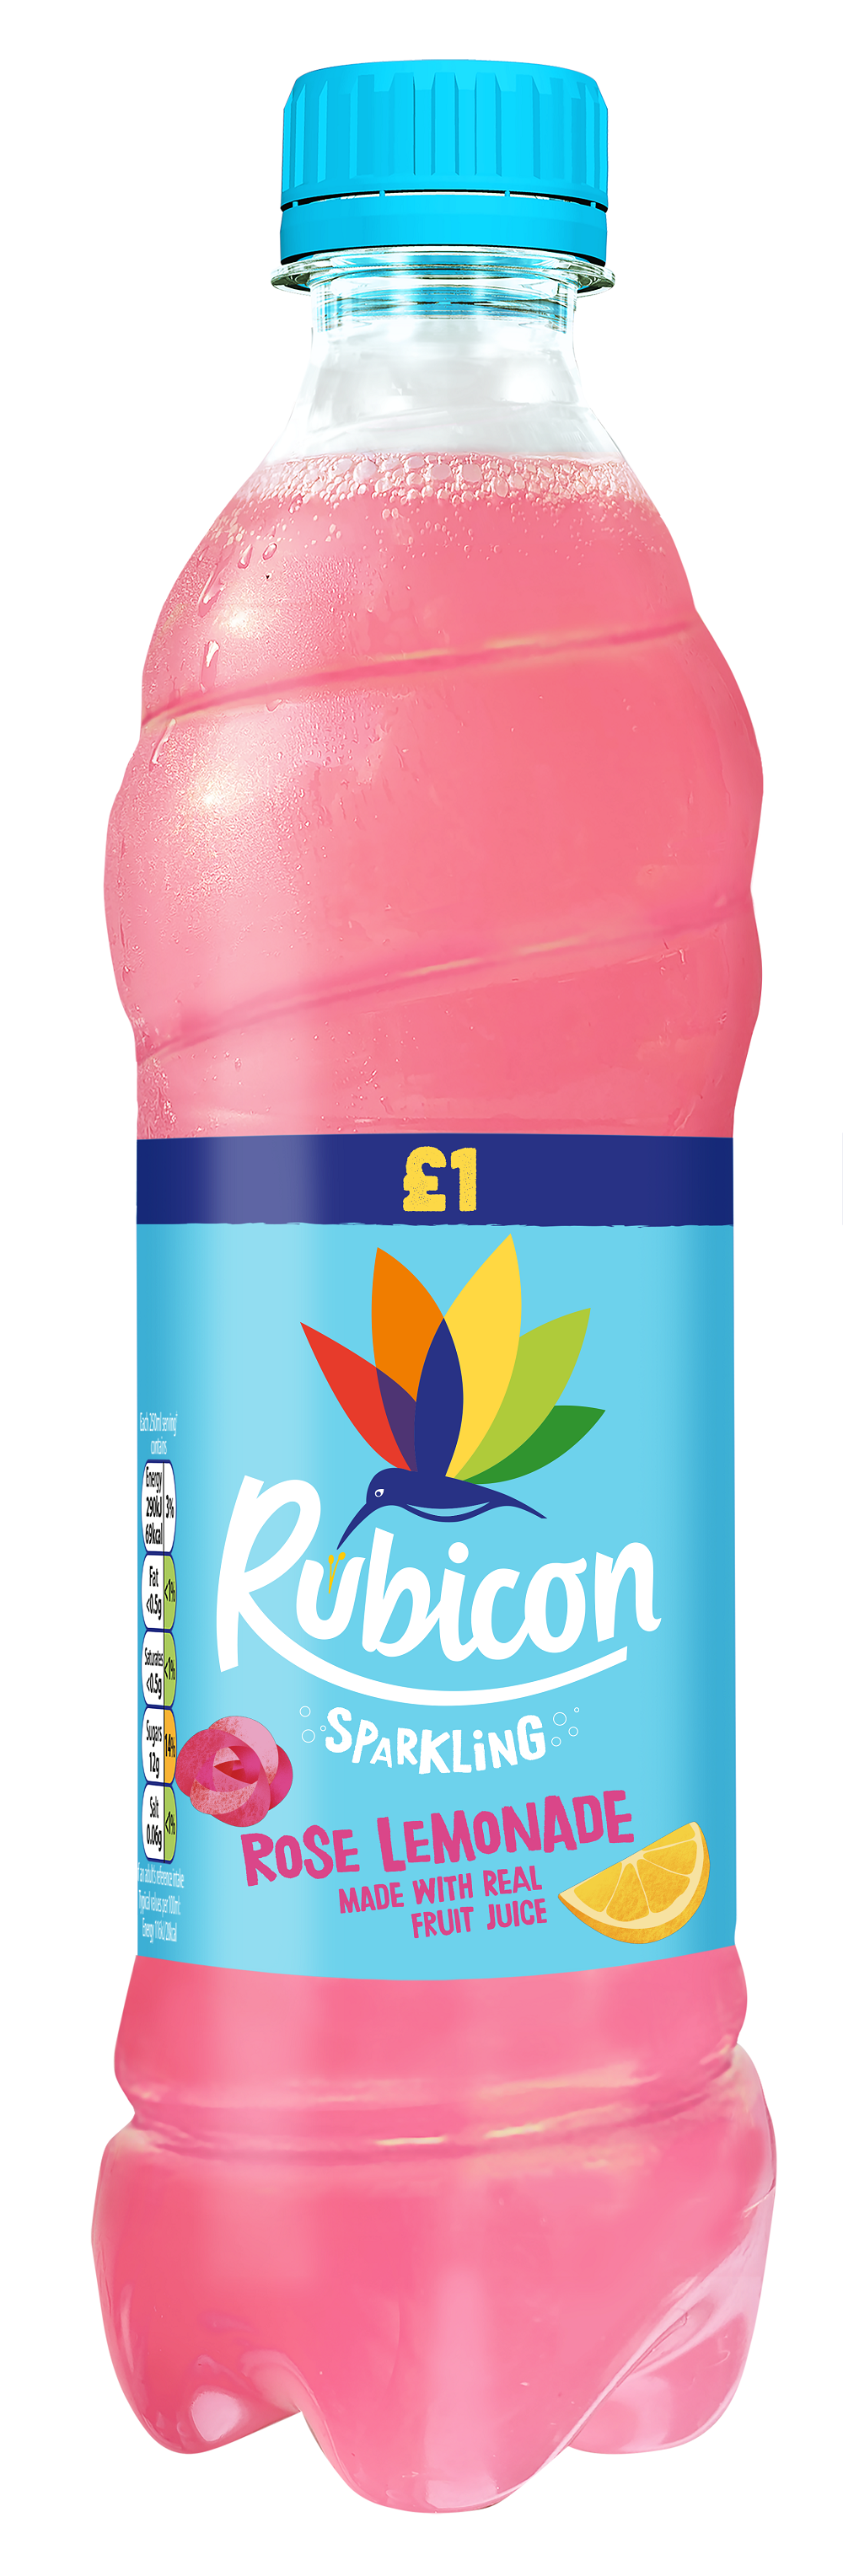 Rubicon launches Rose Lemonade